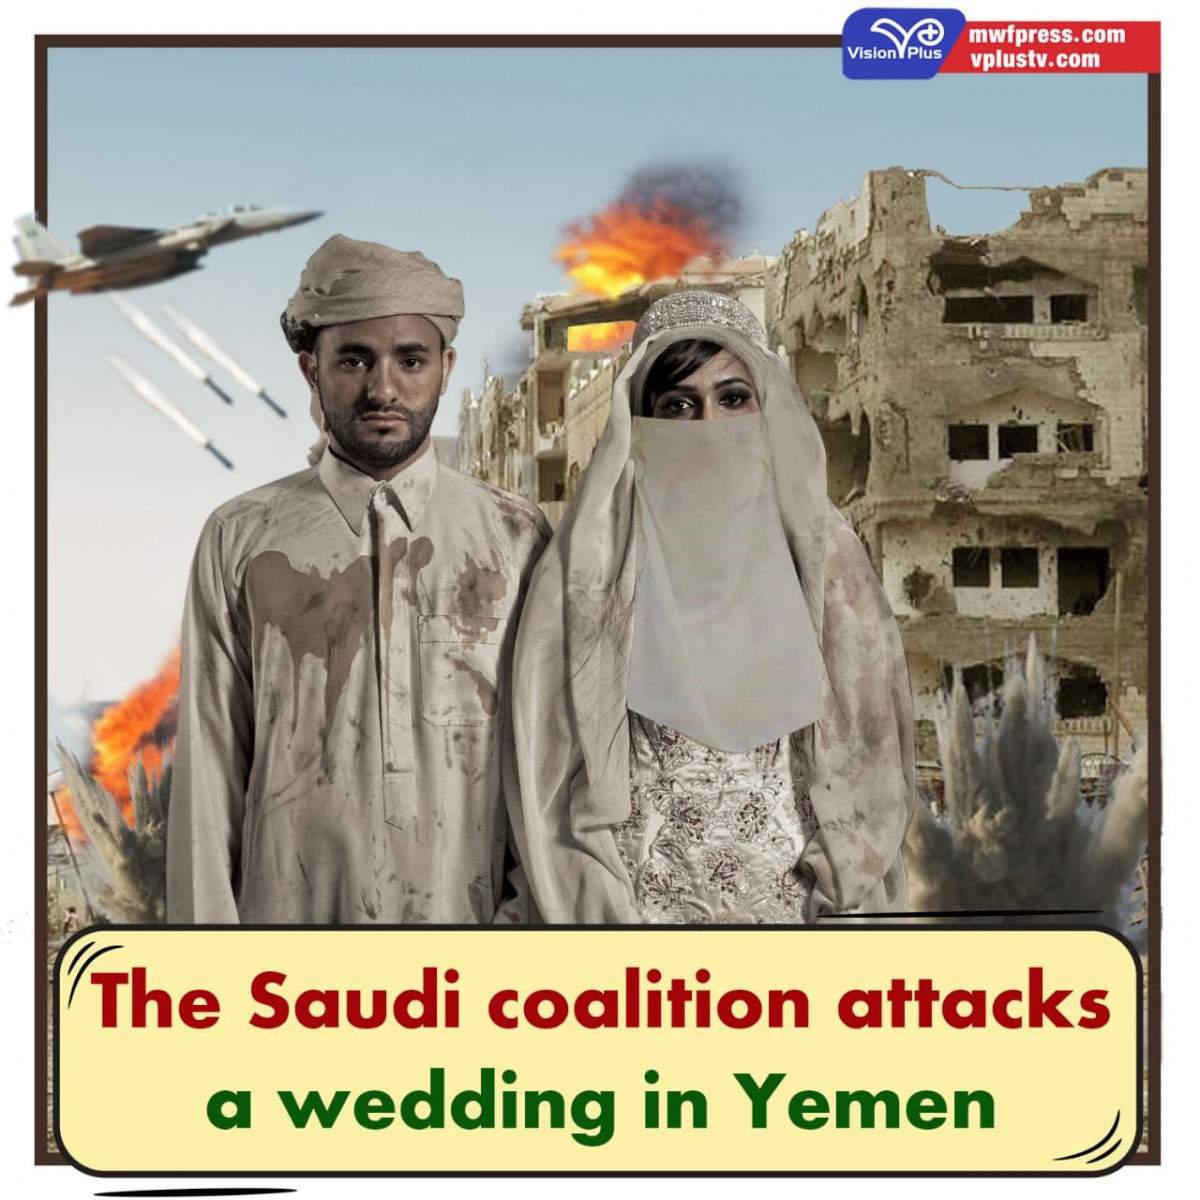 The Saudi coalition attacks a wedding in Yemen